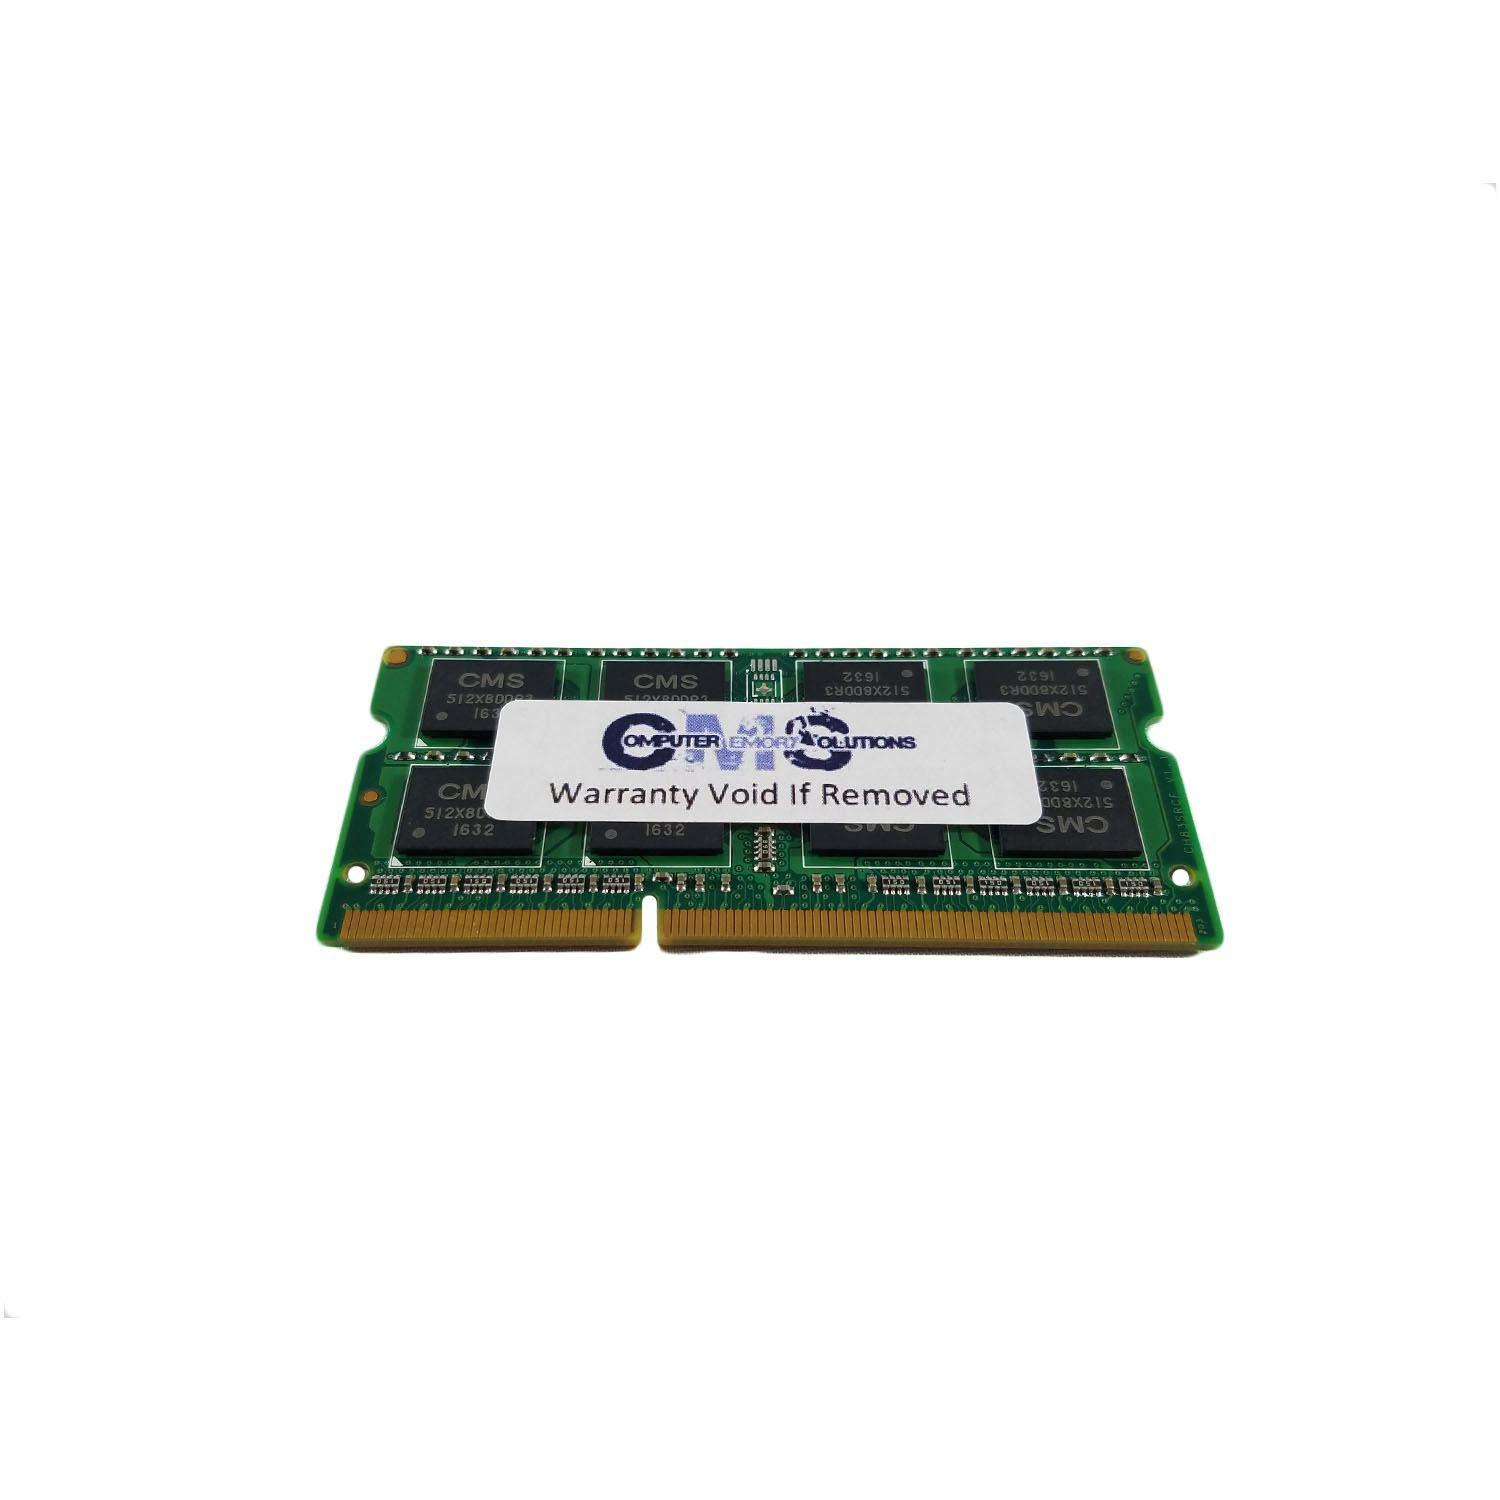 Computer Memory Solutions cms 8gb (1x8gb) ddr3 12800 1600mhz non ecc sodimm memory ram upgrade compatible with hp/compaq elitedesk 800 g1 mini desktop 